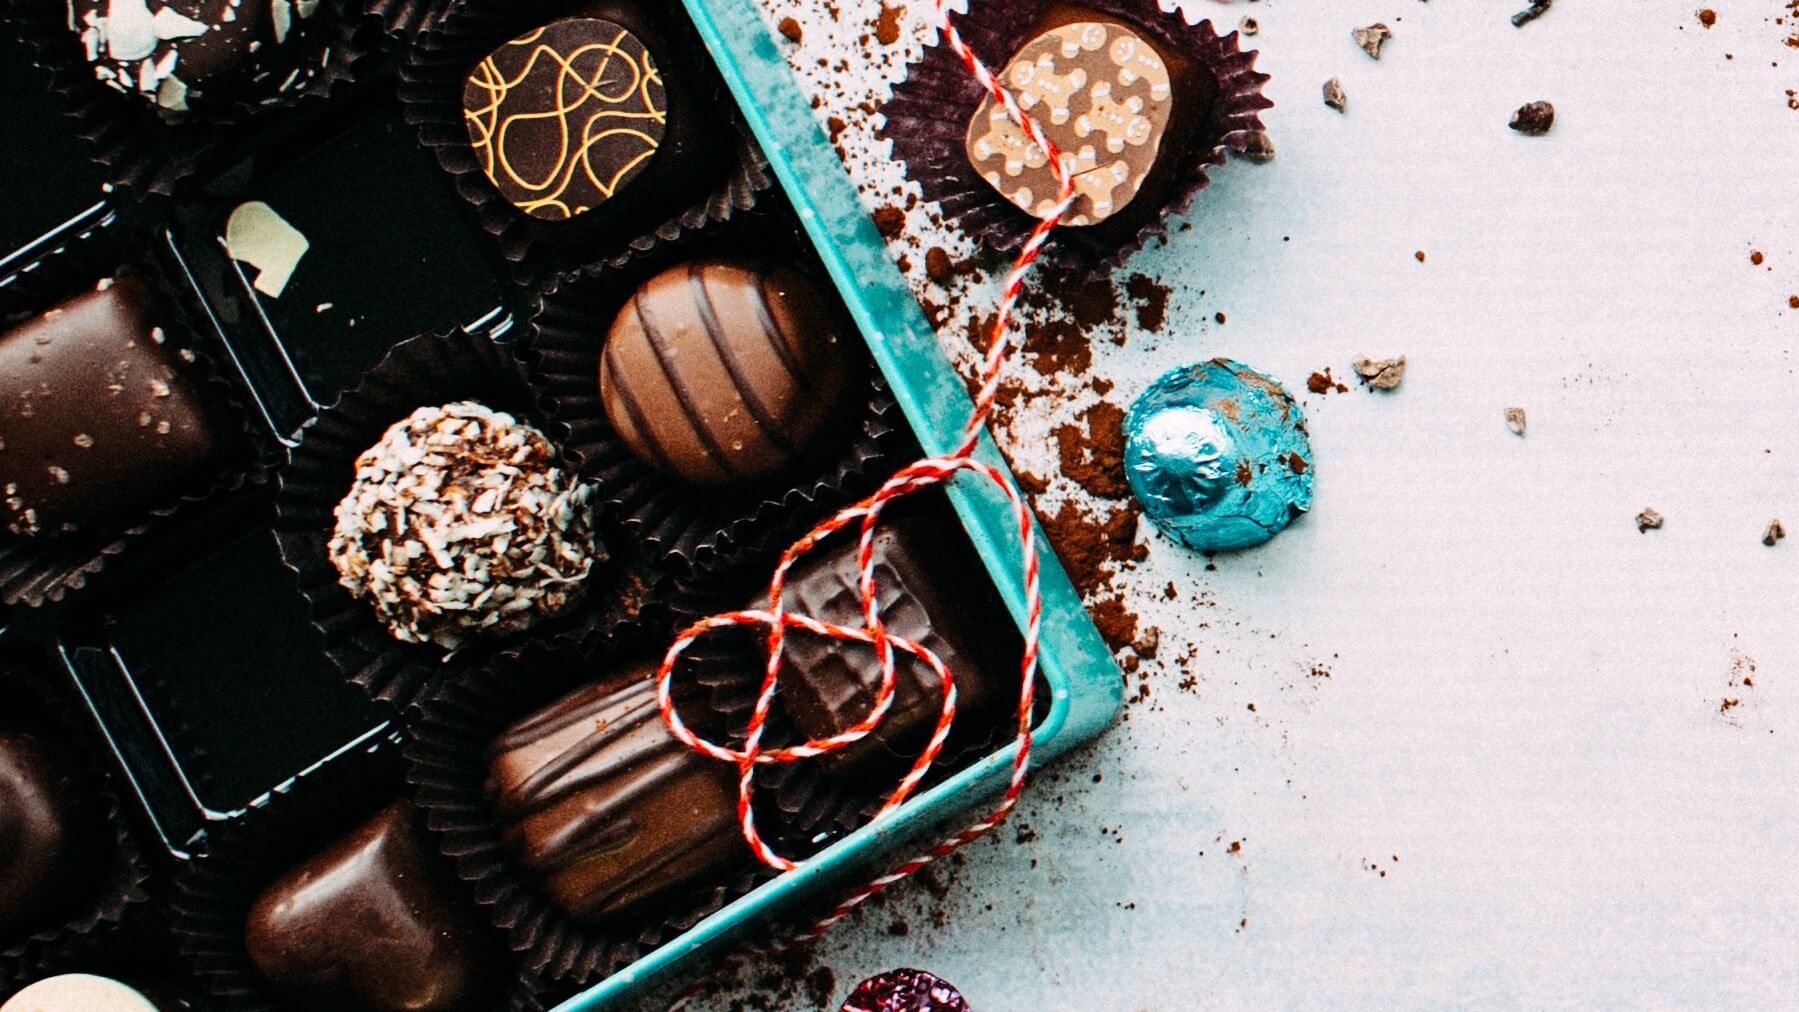 Artisan Vegan Chocolate Shop BON Chocolatier Specializes in High-End Truffles With Unique Flavors